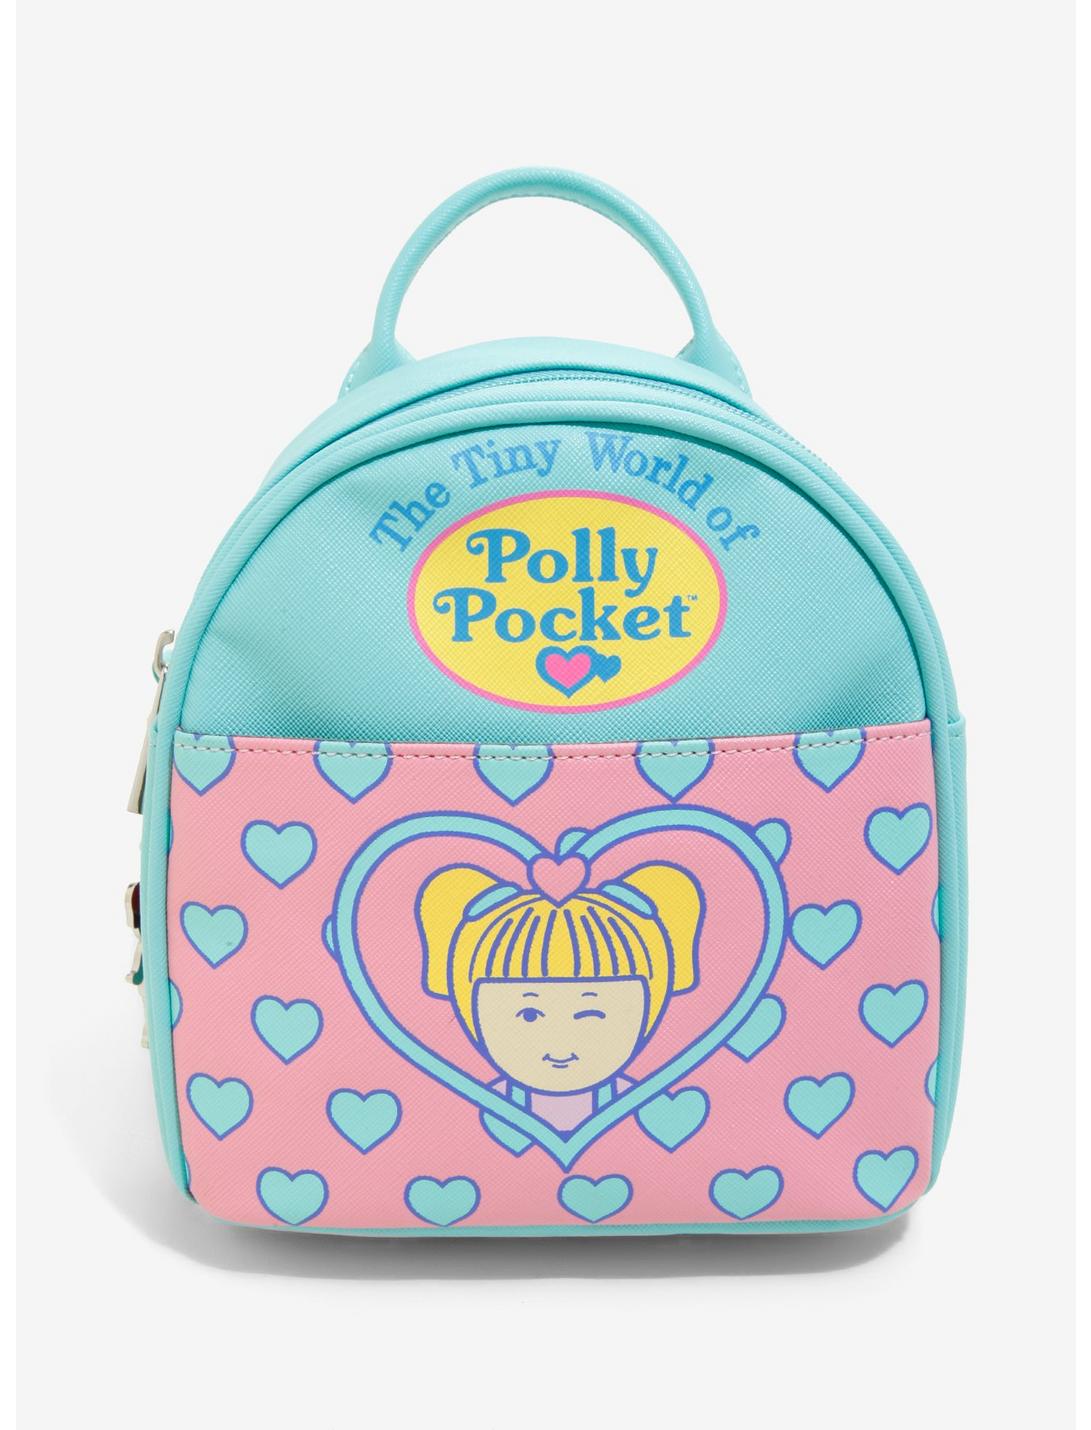 Polly Pocket Backpack Bag Mini NEW 